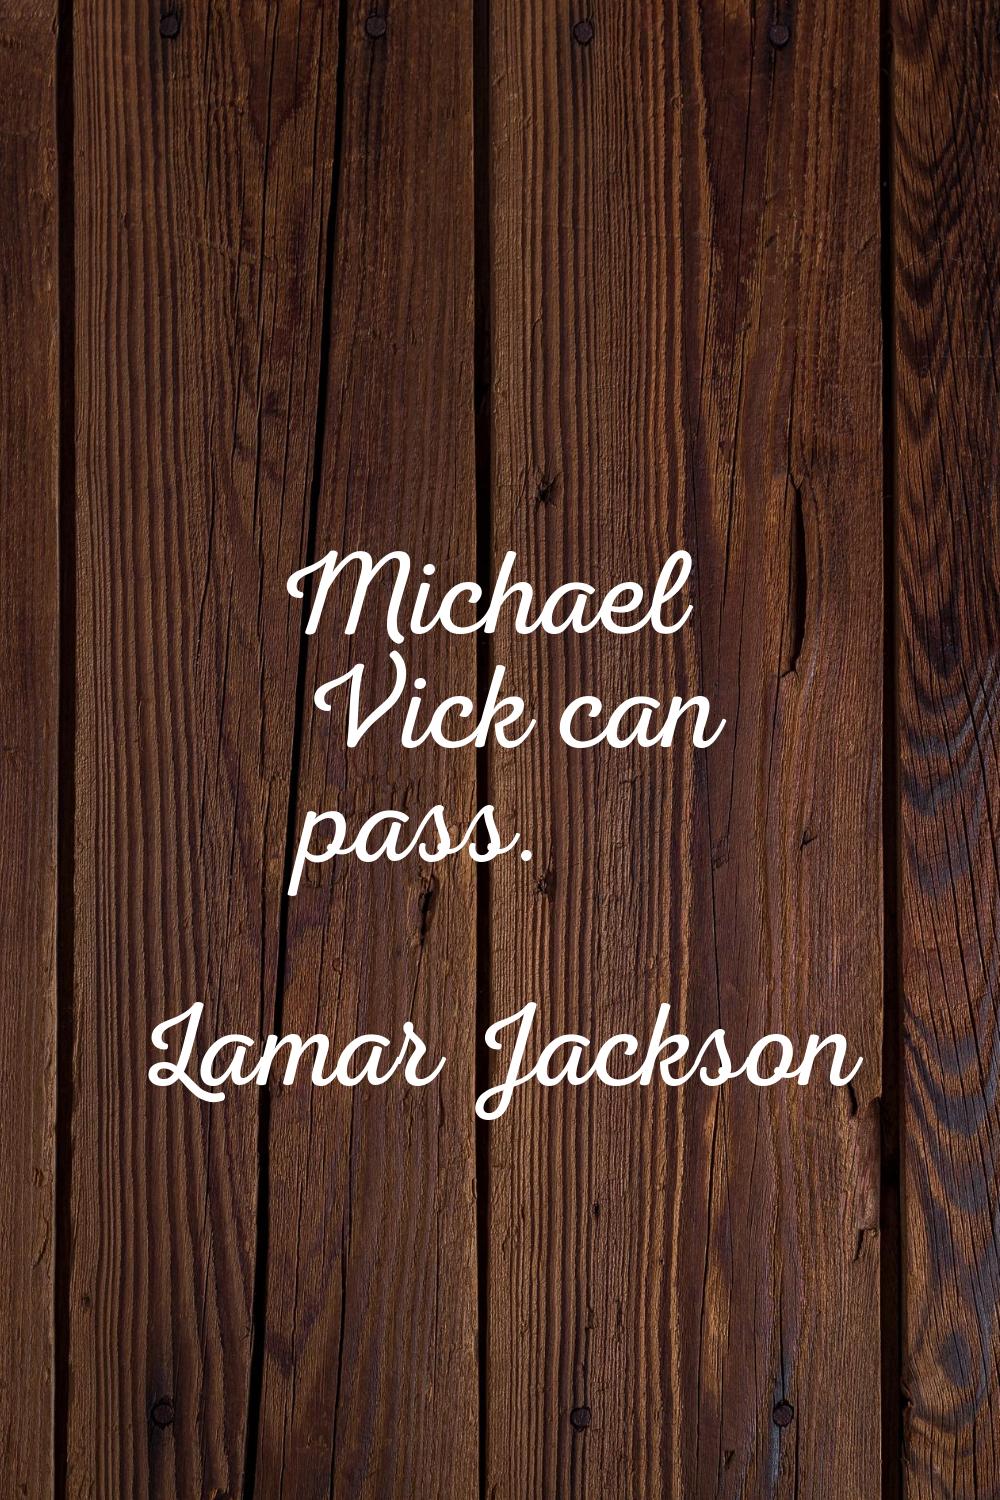 Michael Vick can pass.